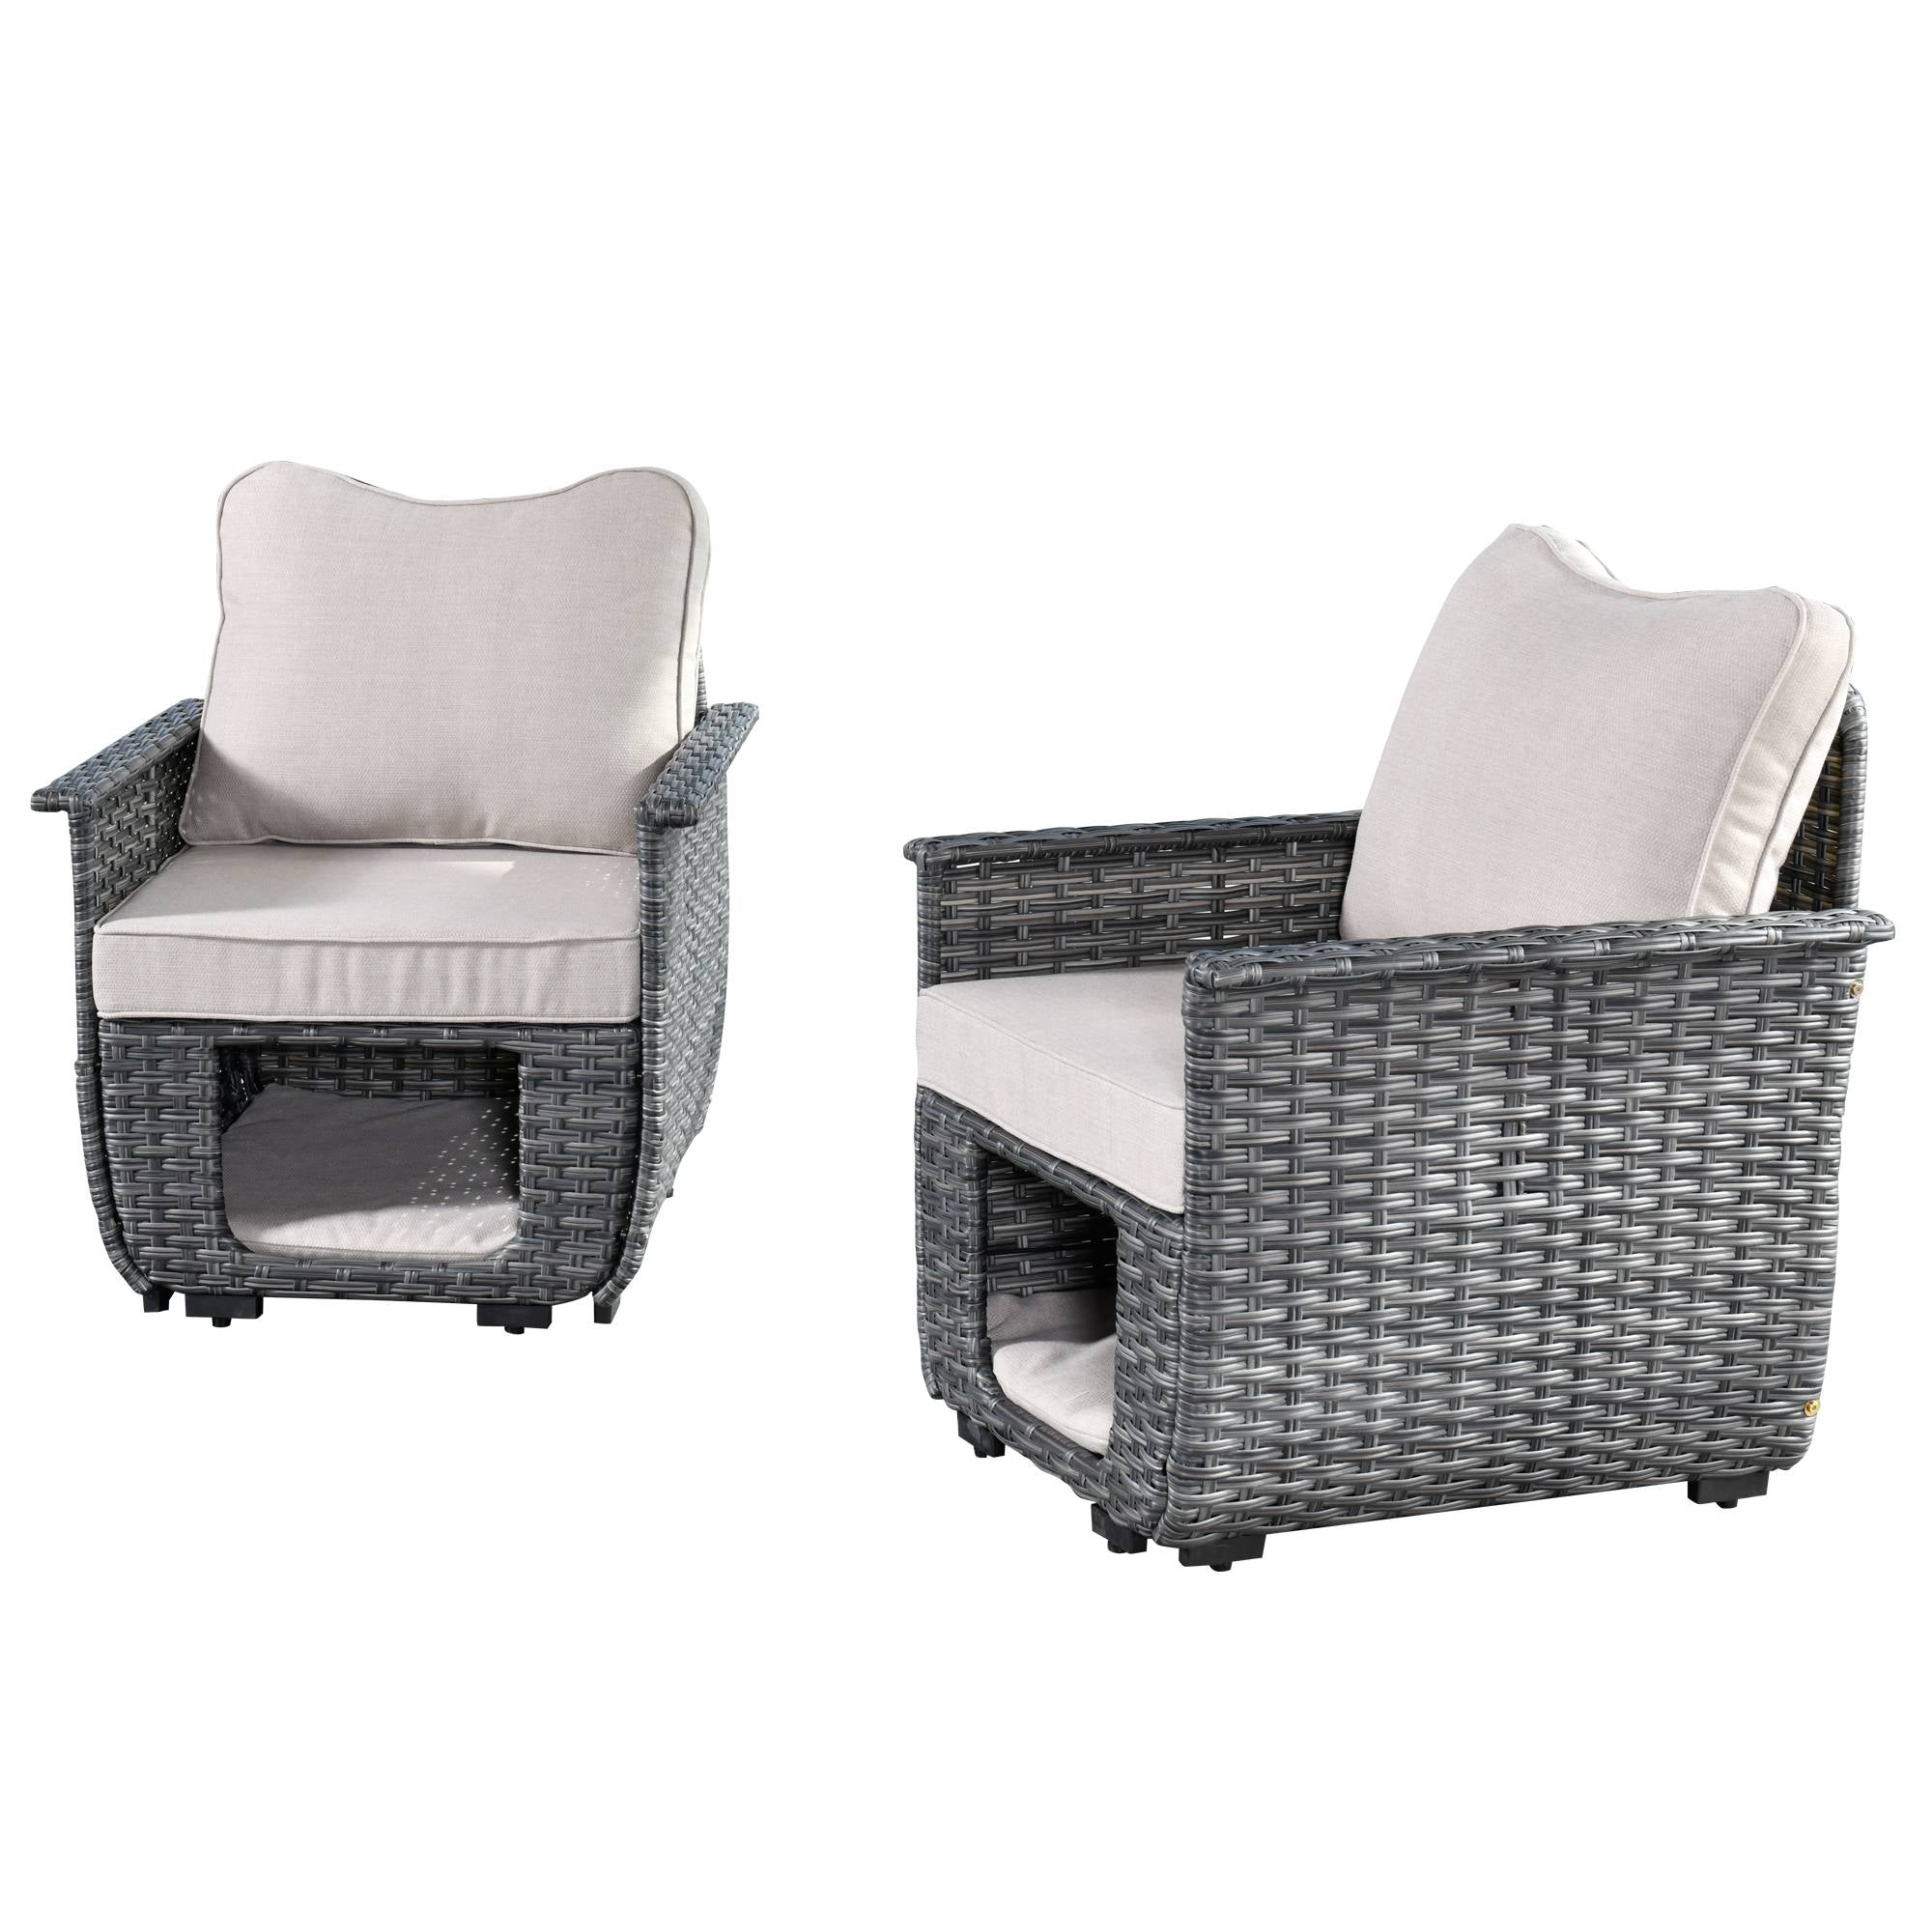 Ovios Patio Chairs Dark Grey Wicker 2 Pieces with Multifunctional Storage